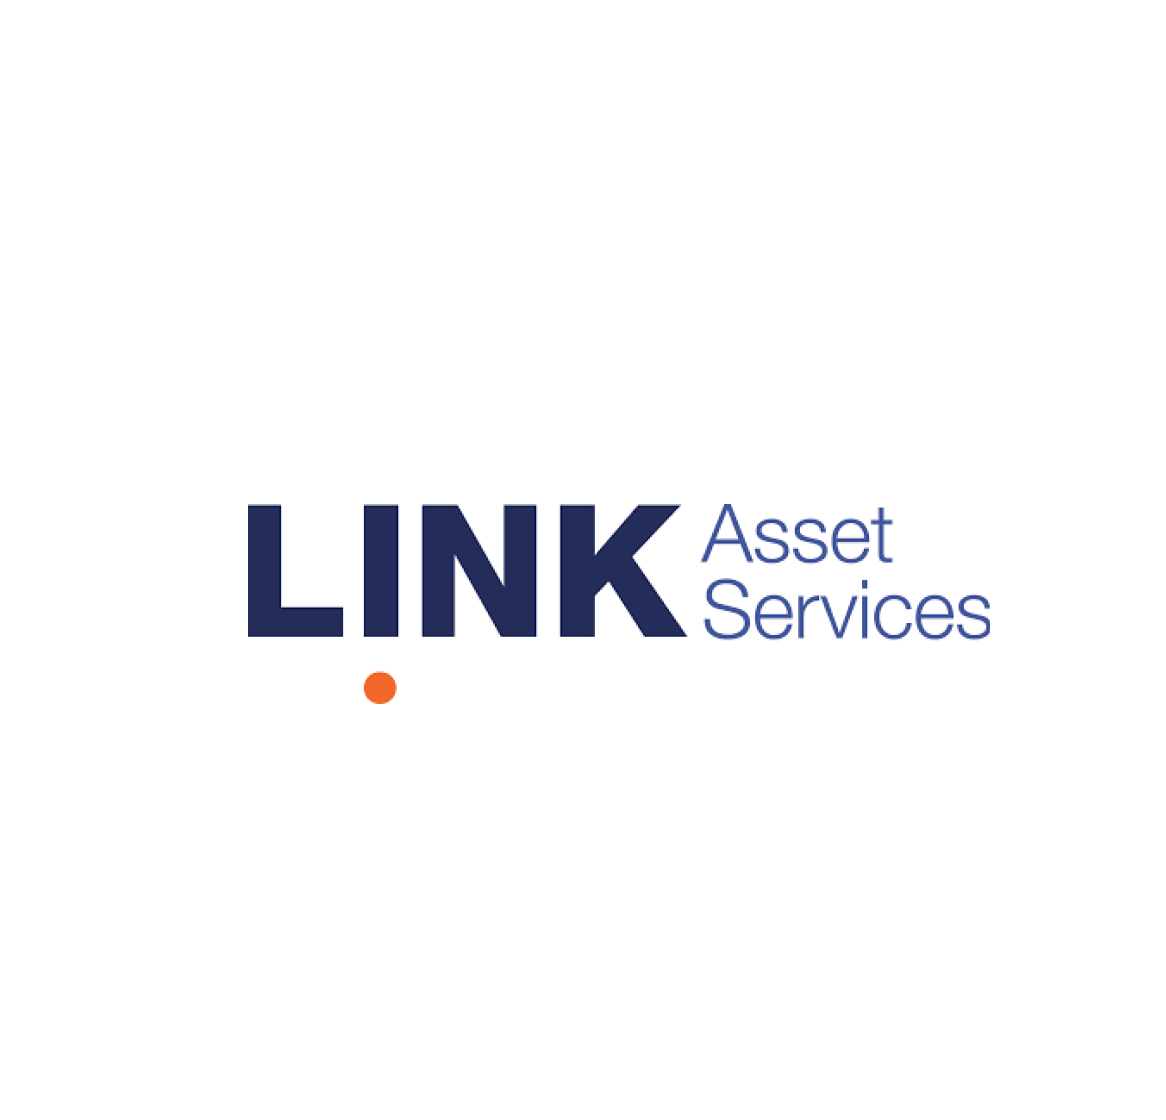 Link Asset Services expands Flex Front Mortgage's mid-office platform.